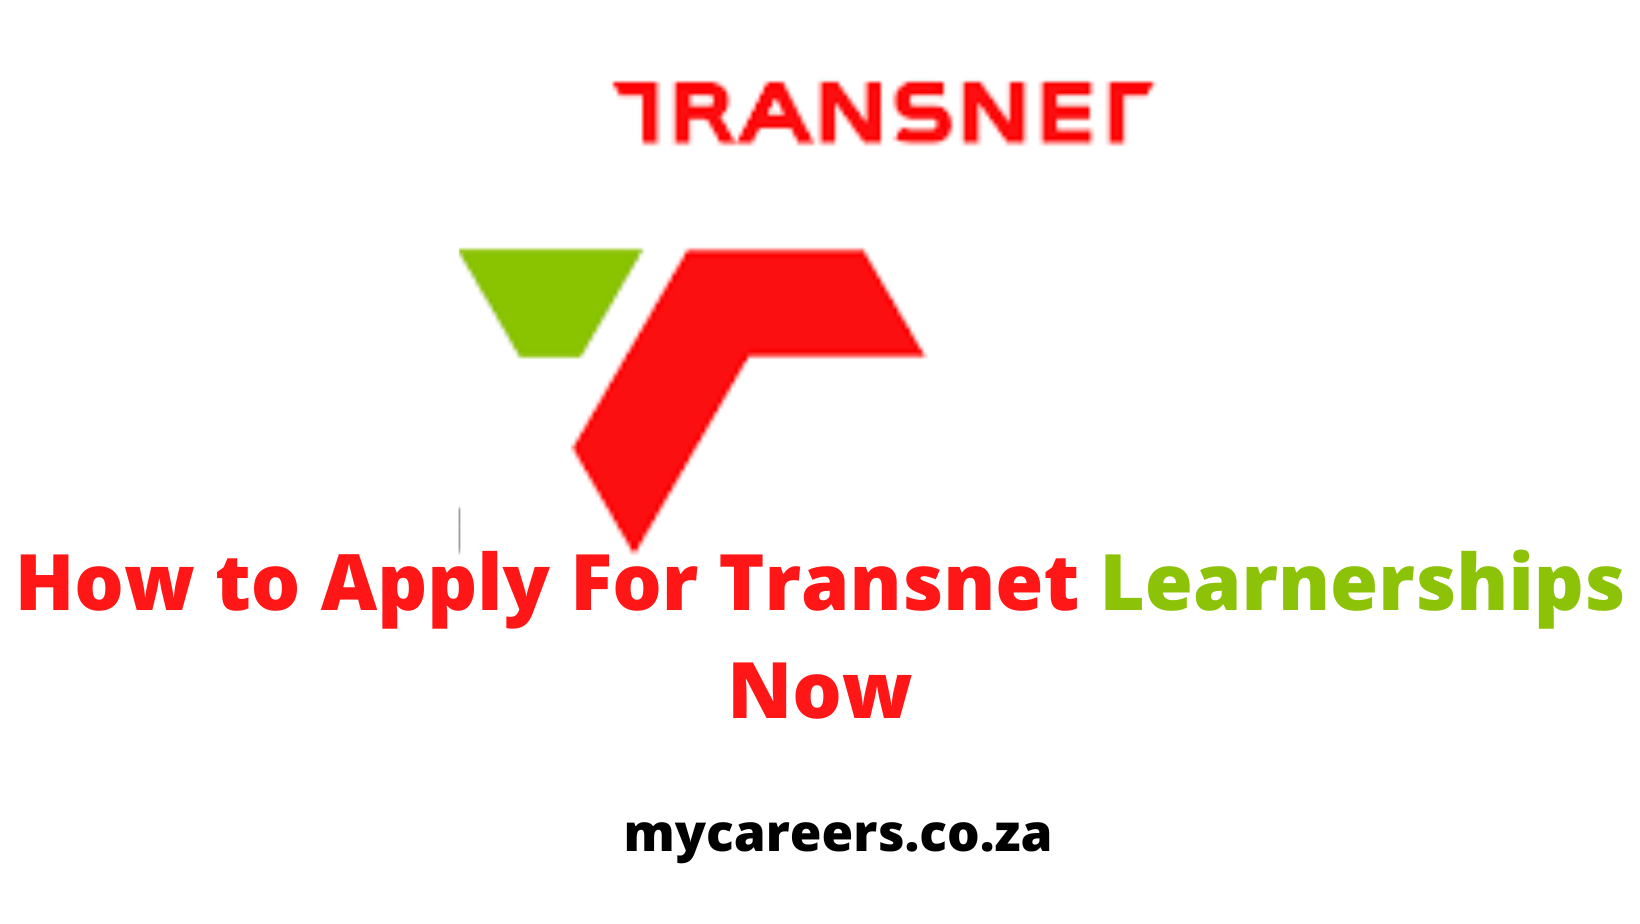 Transnet Learnership Programme Applications